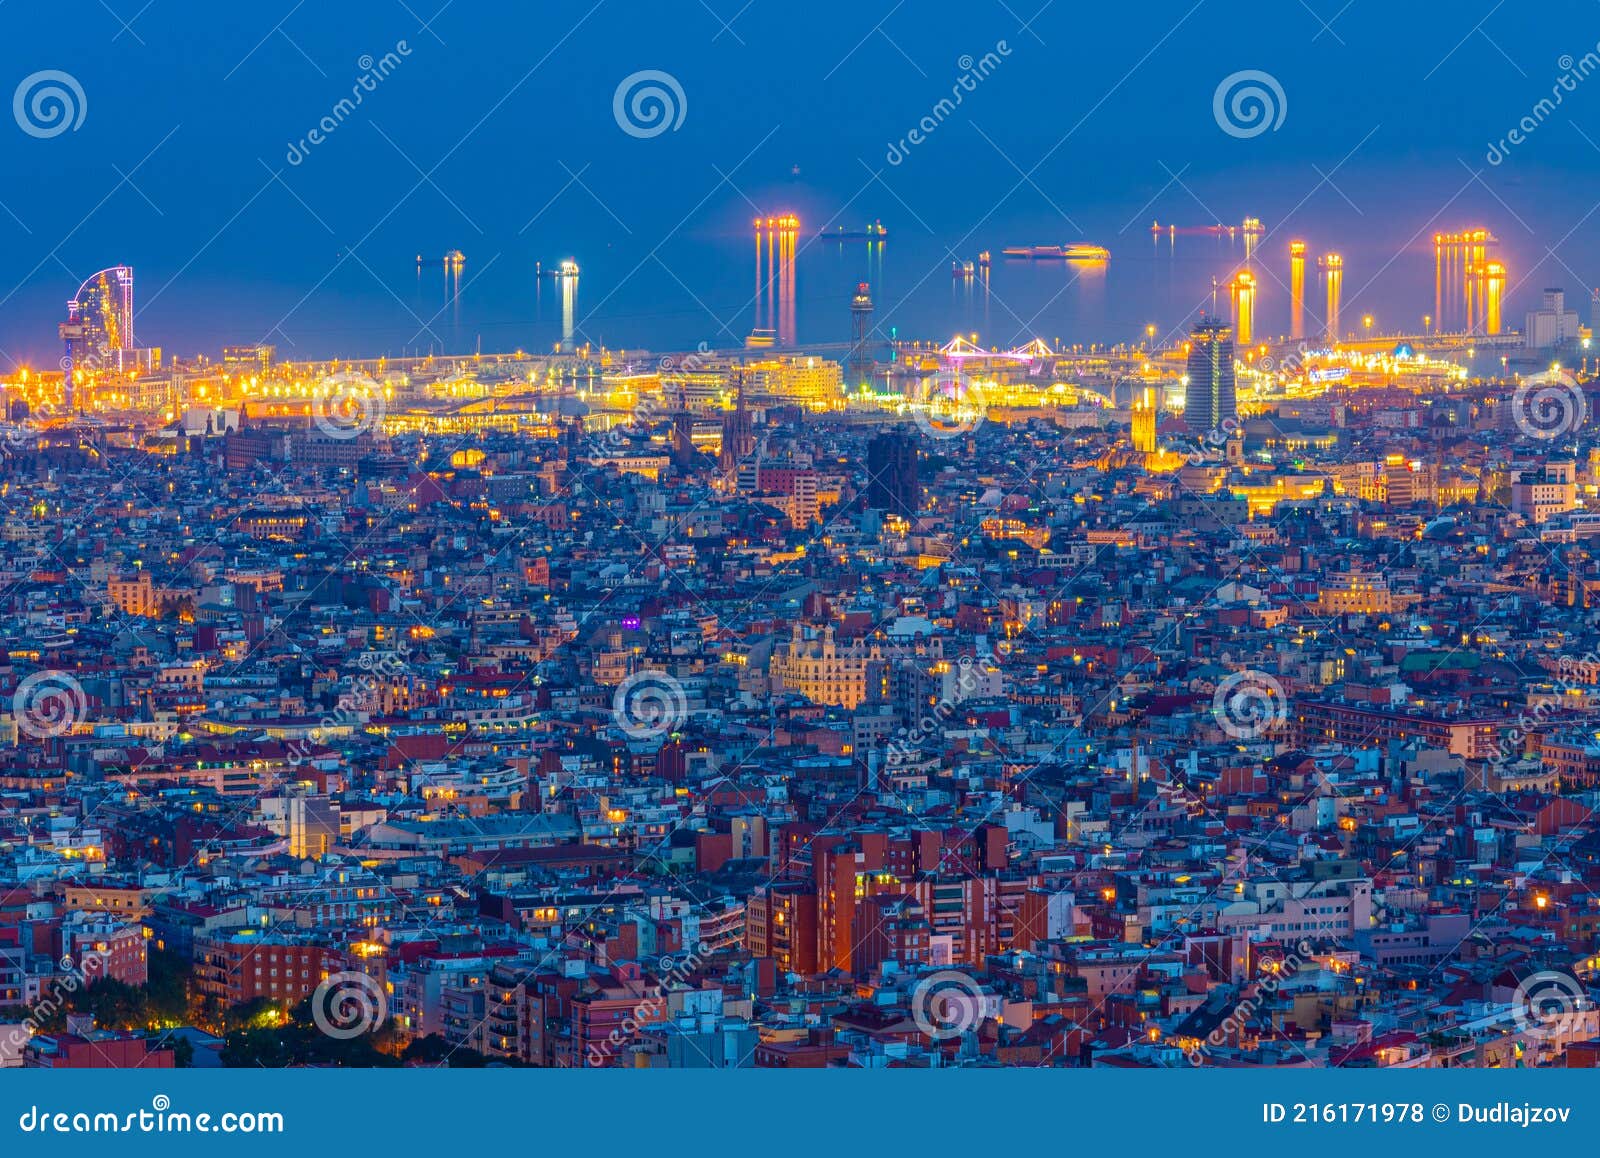 night view of the ciutat vella of barcelona, spain